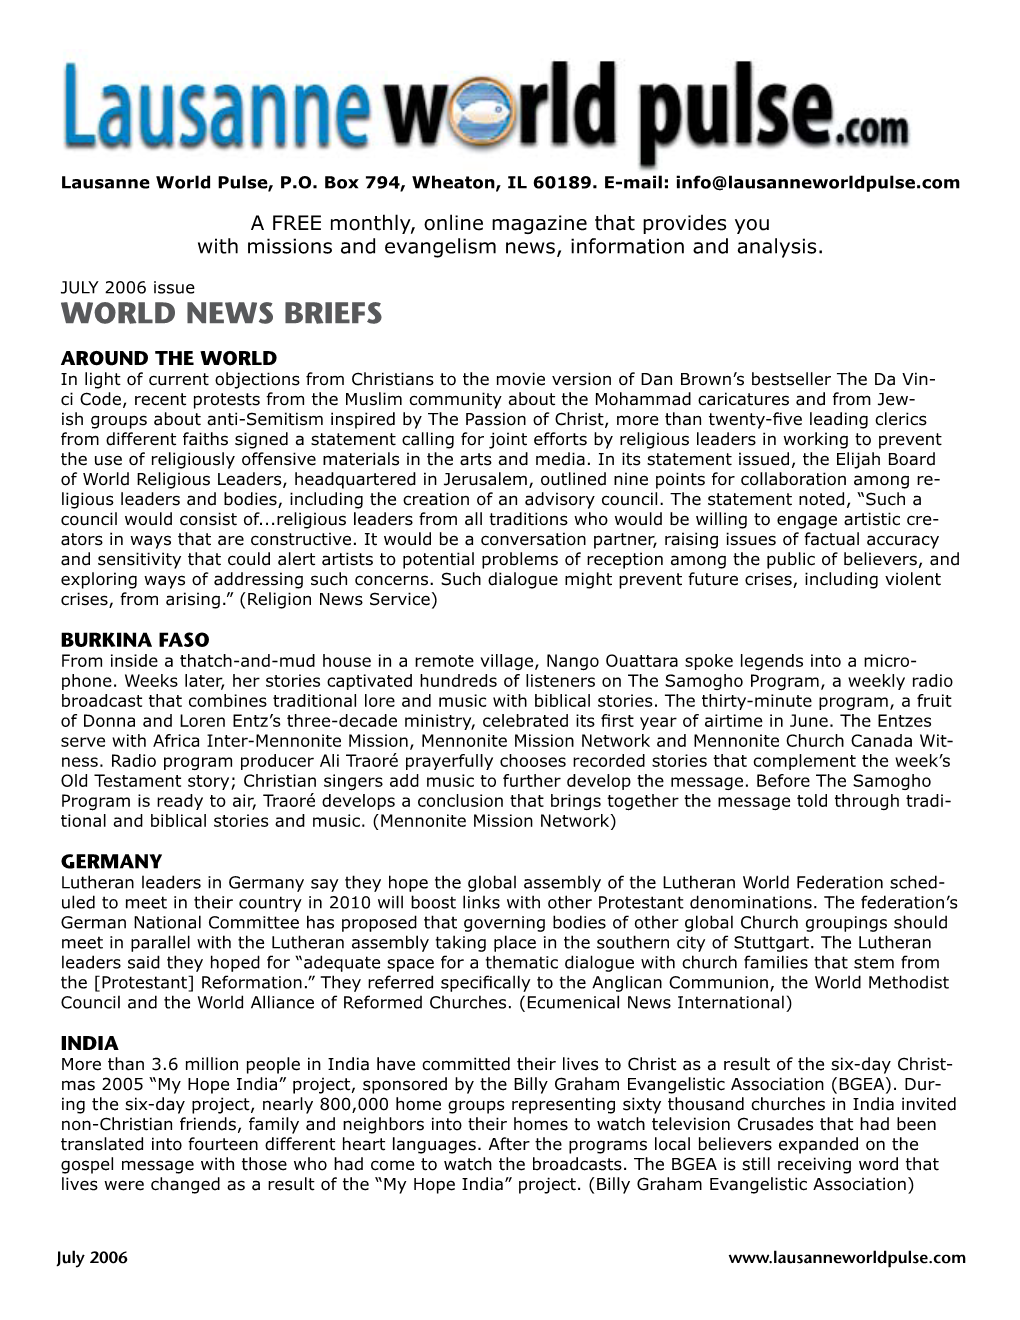 World News Briefs